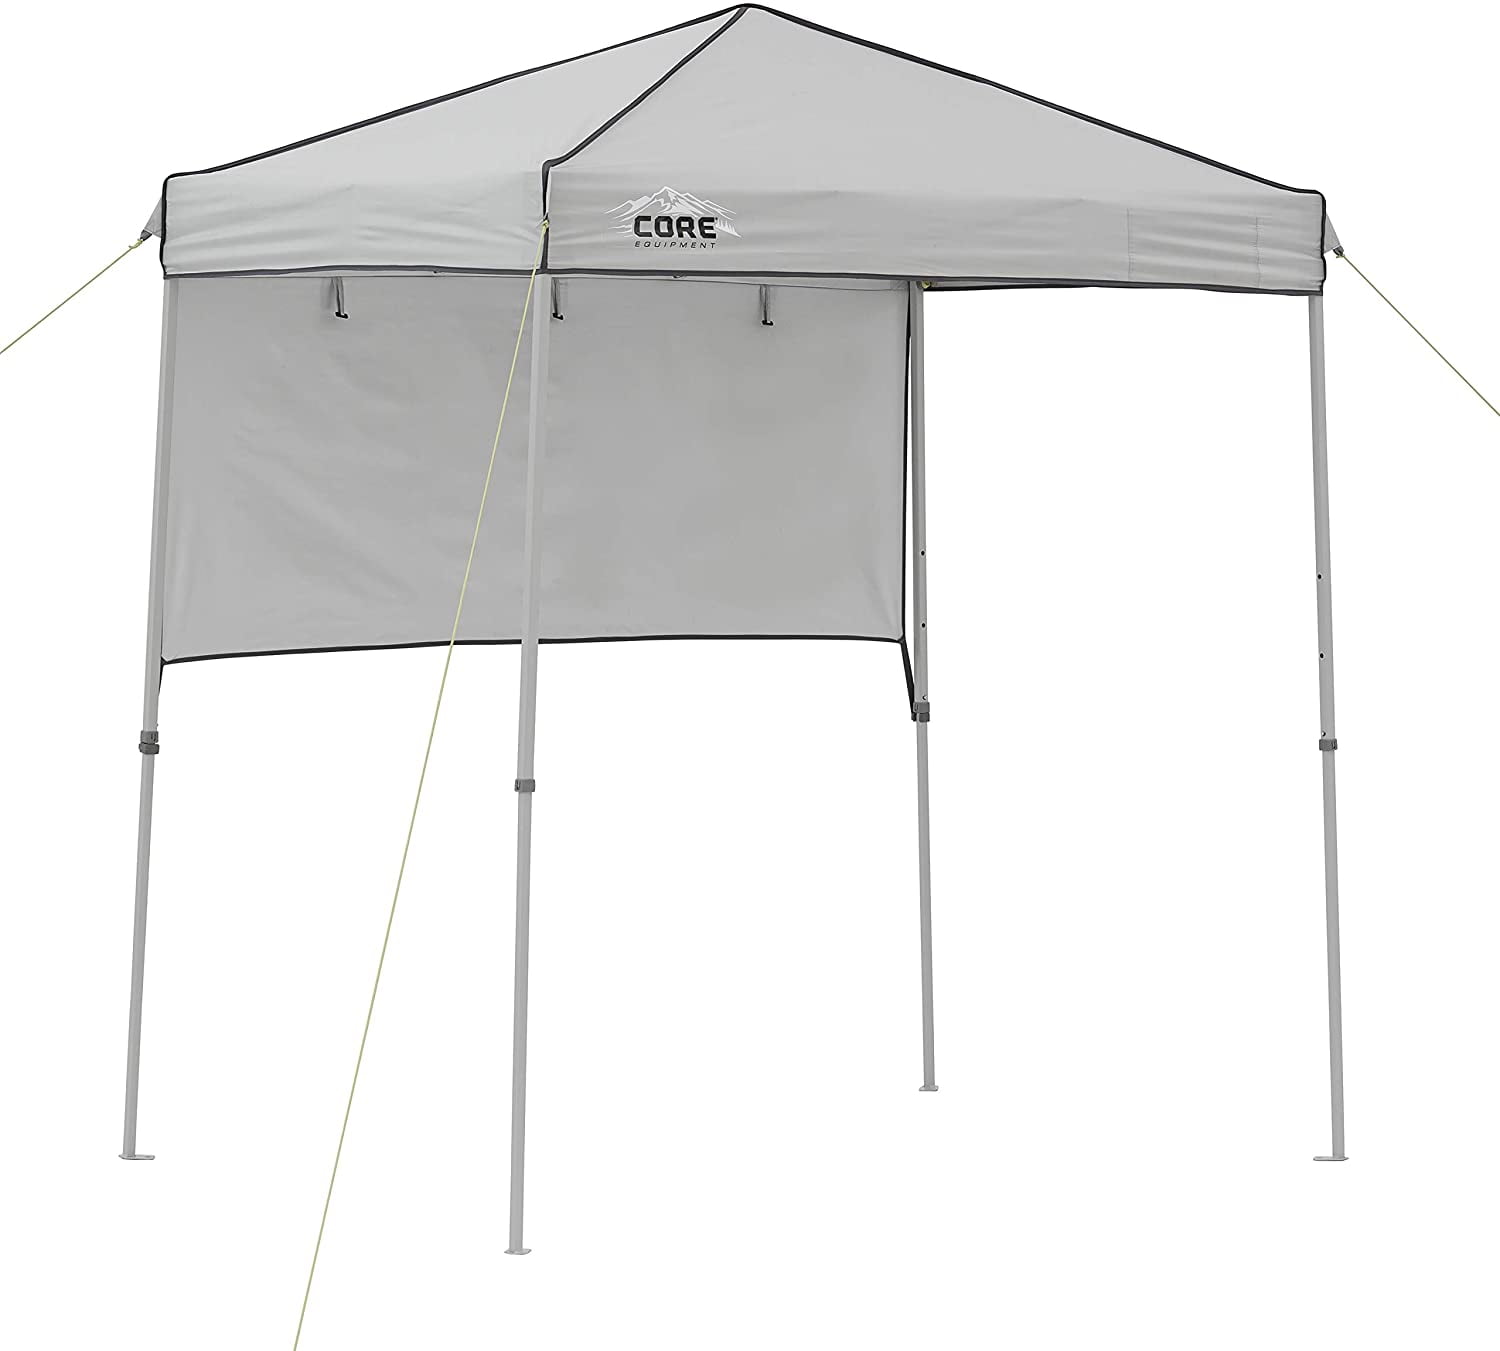 Sun Six Hd Video - Core Instant Straight Leg Canopy Tent with Adjustable Sun Wall, 6 ft x 4 ft  , Gray - Walmart.com